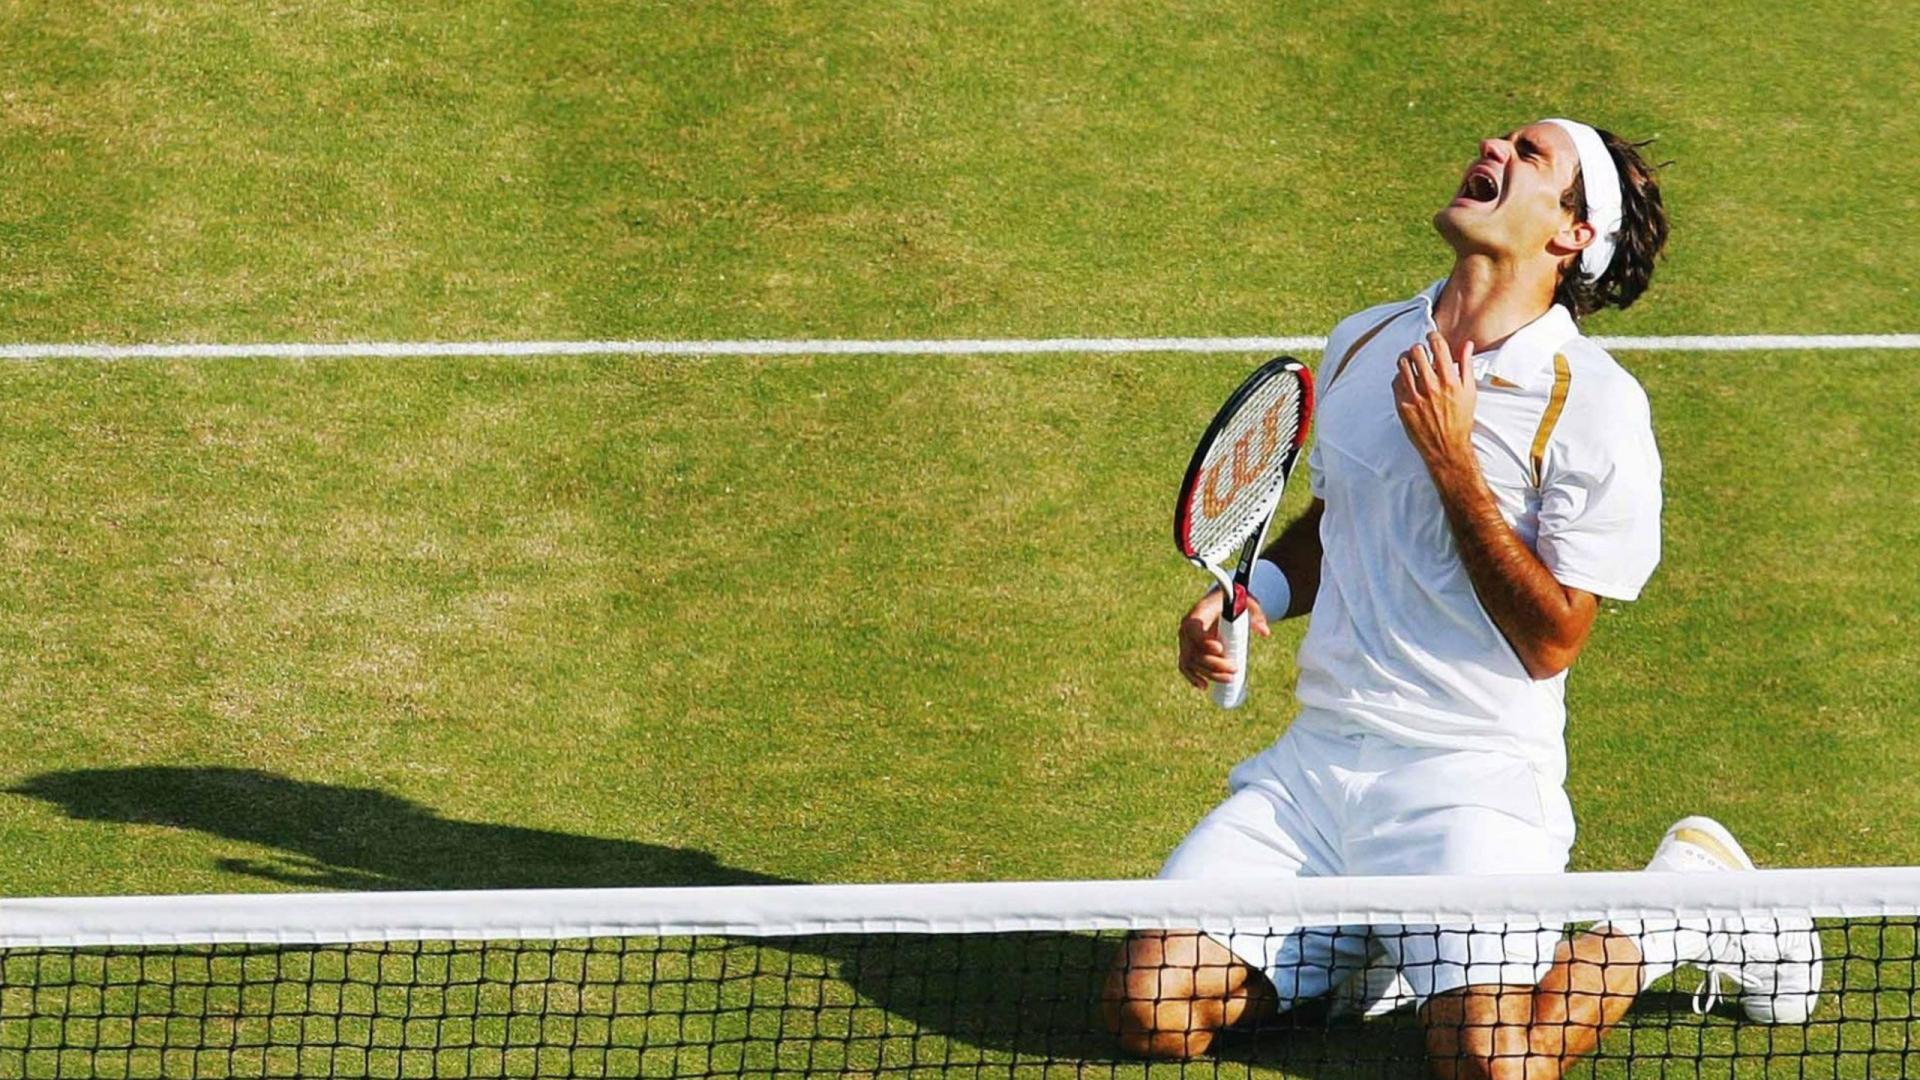 Wimbledon federer Roger Federer